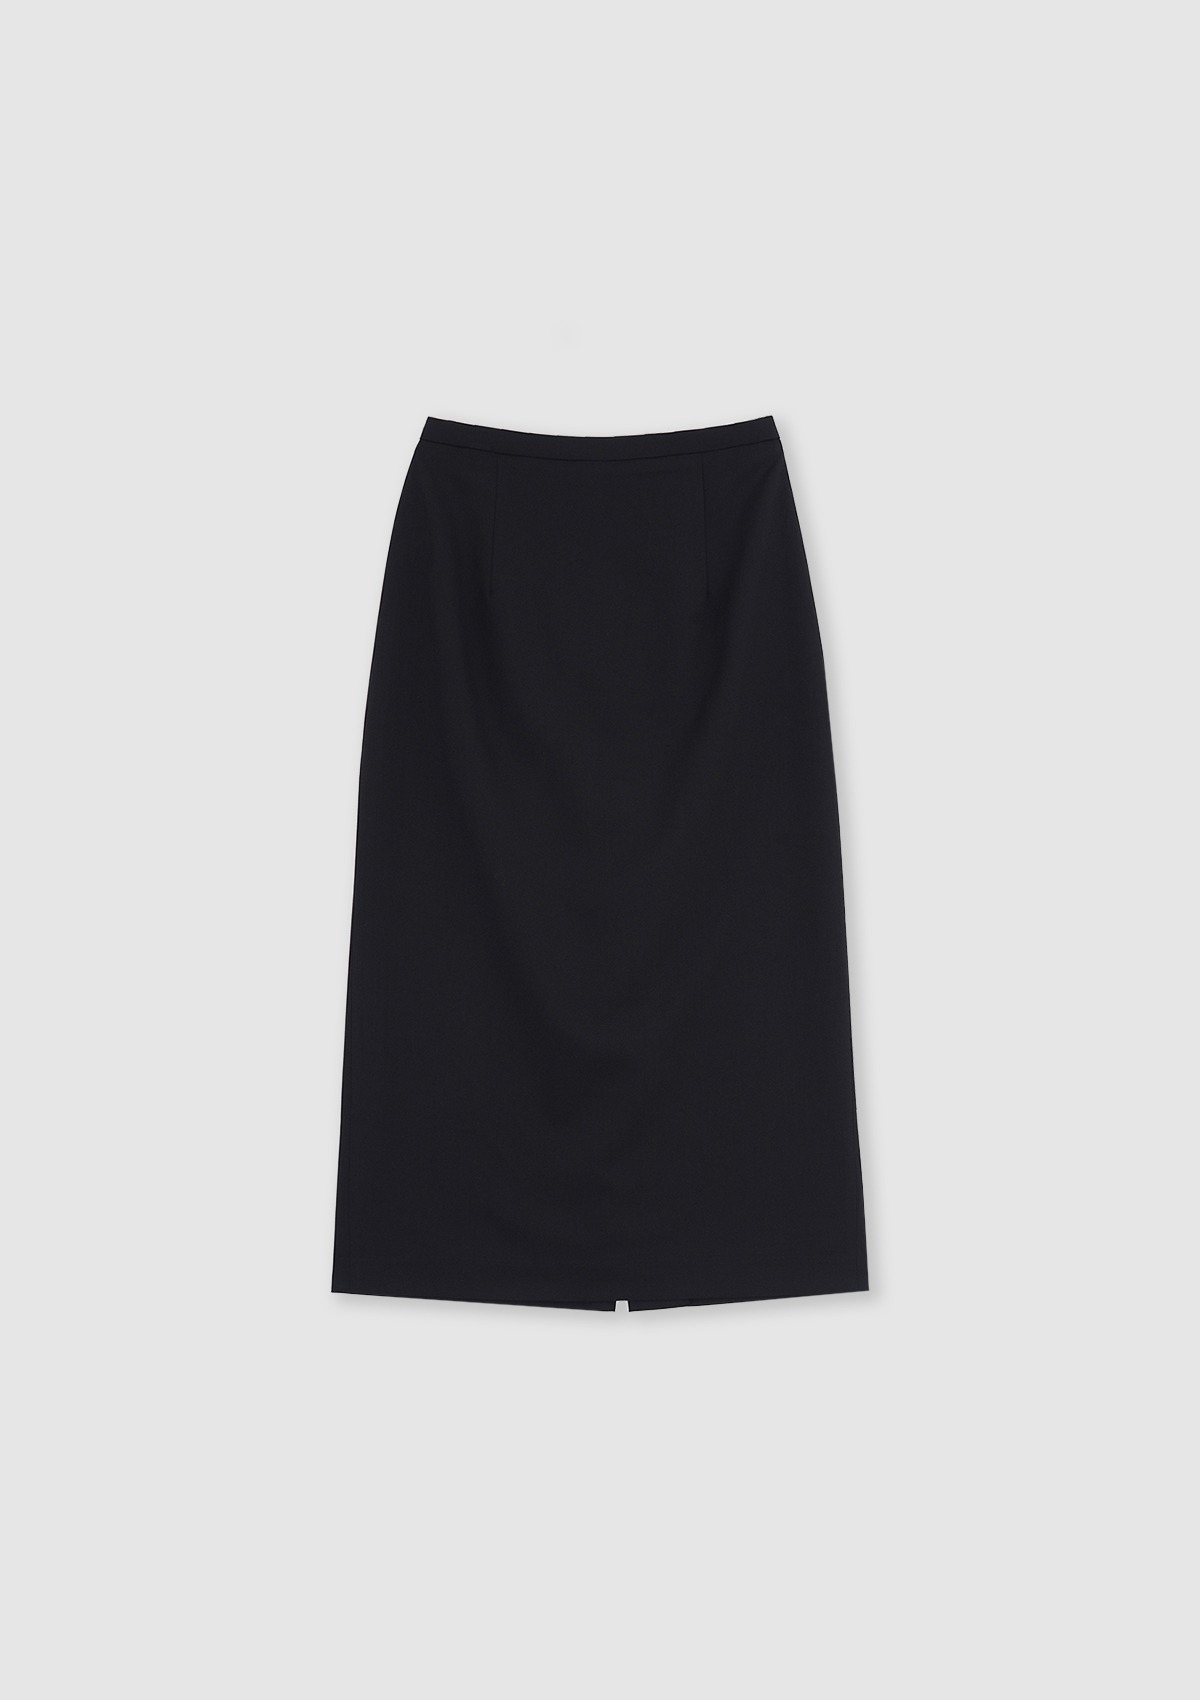 Bun Skirt (Black)